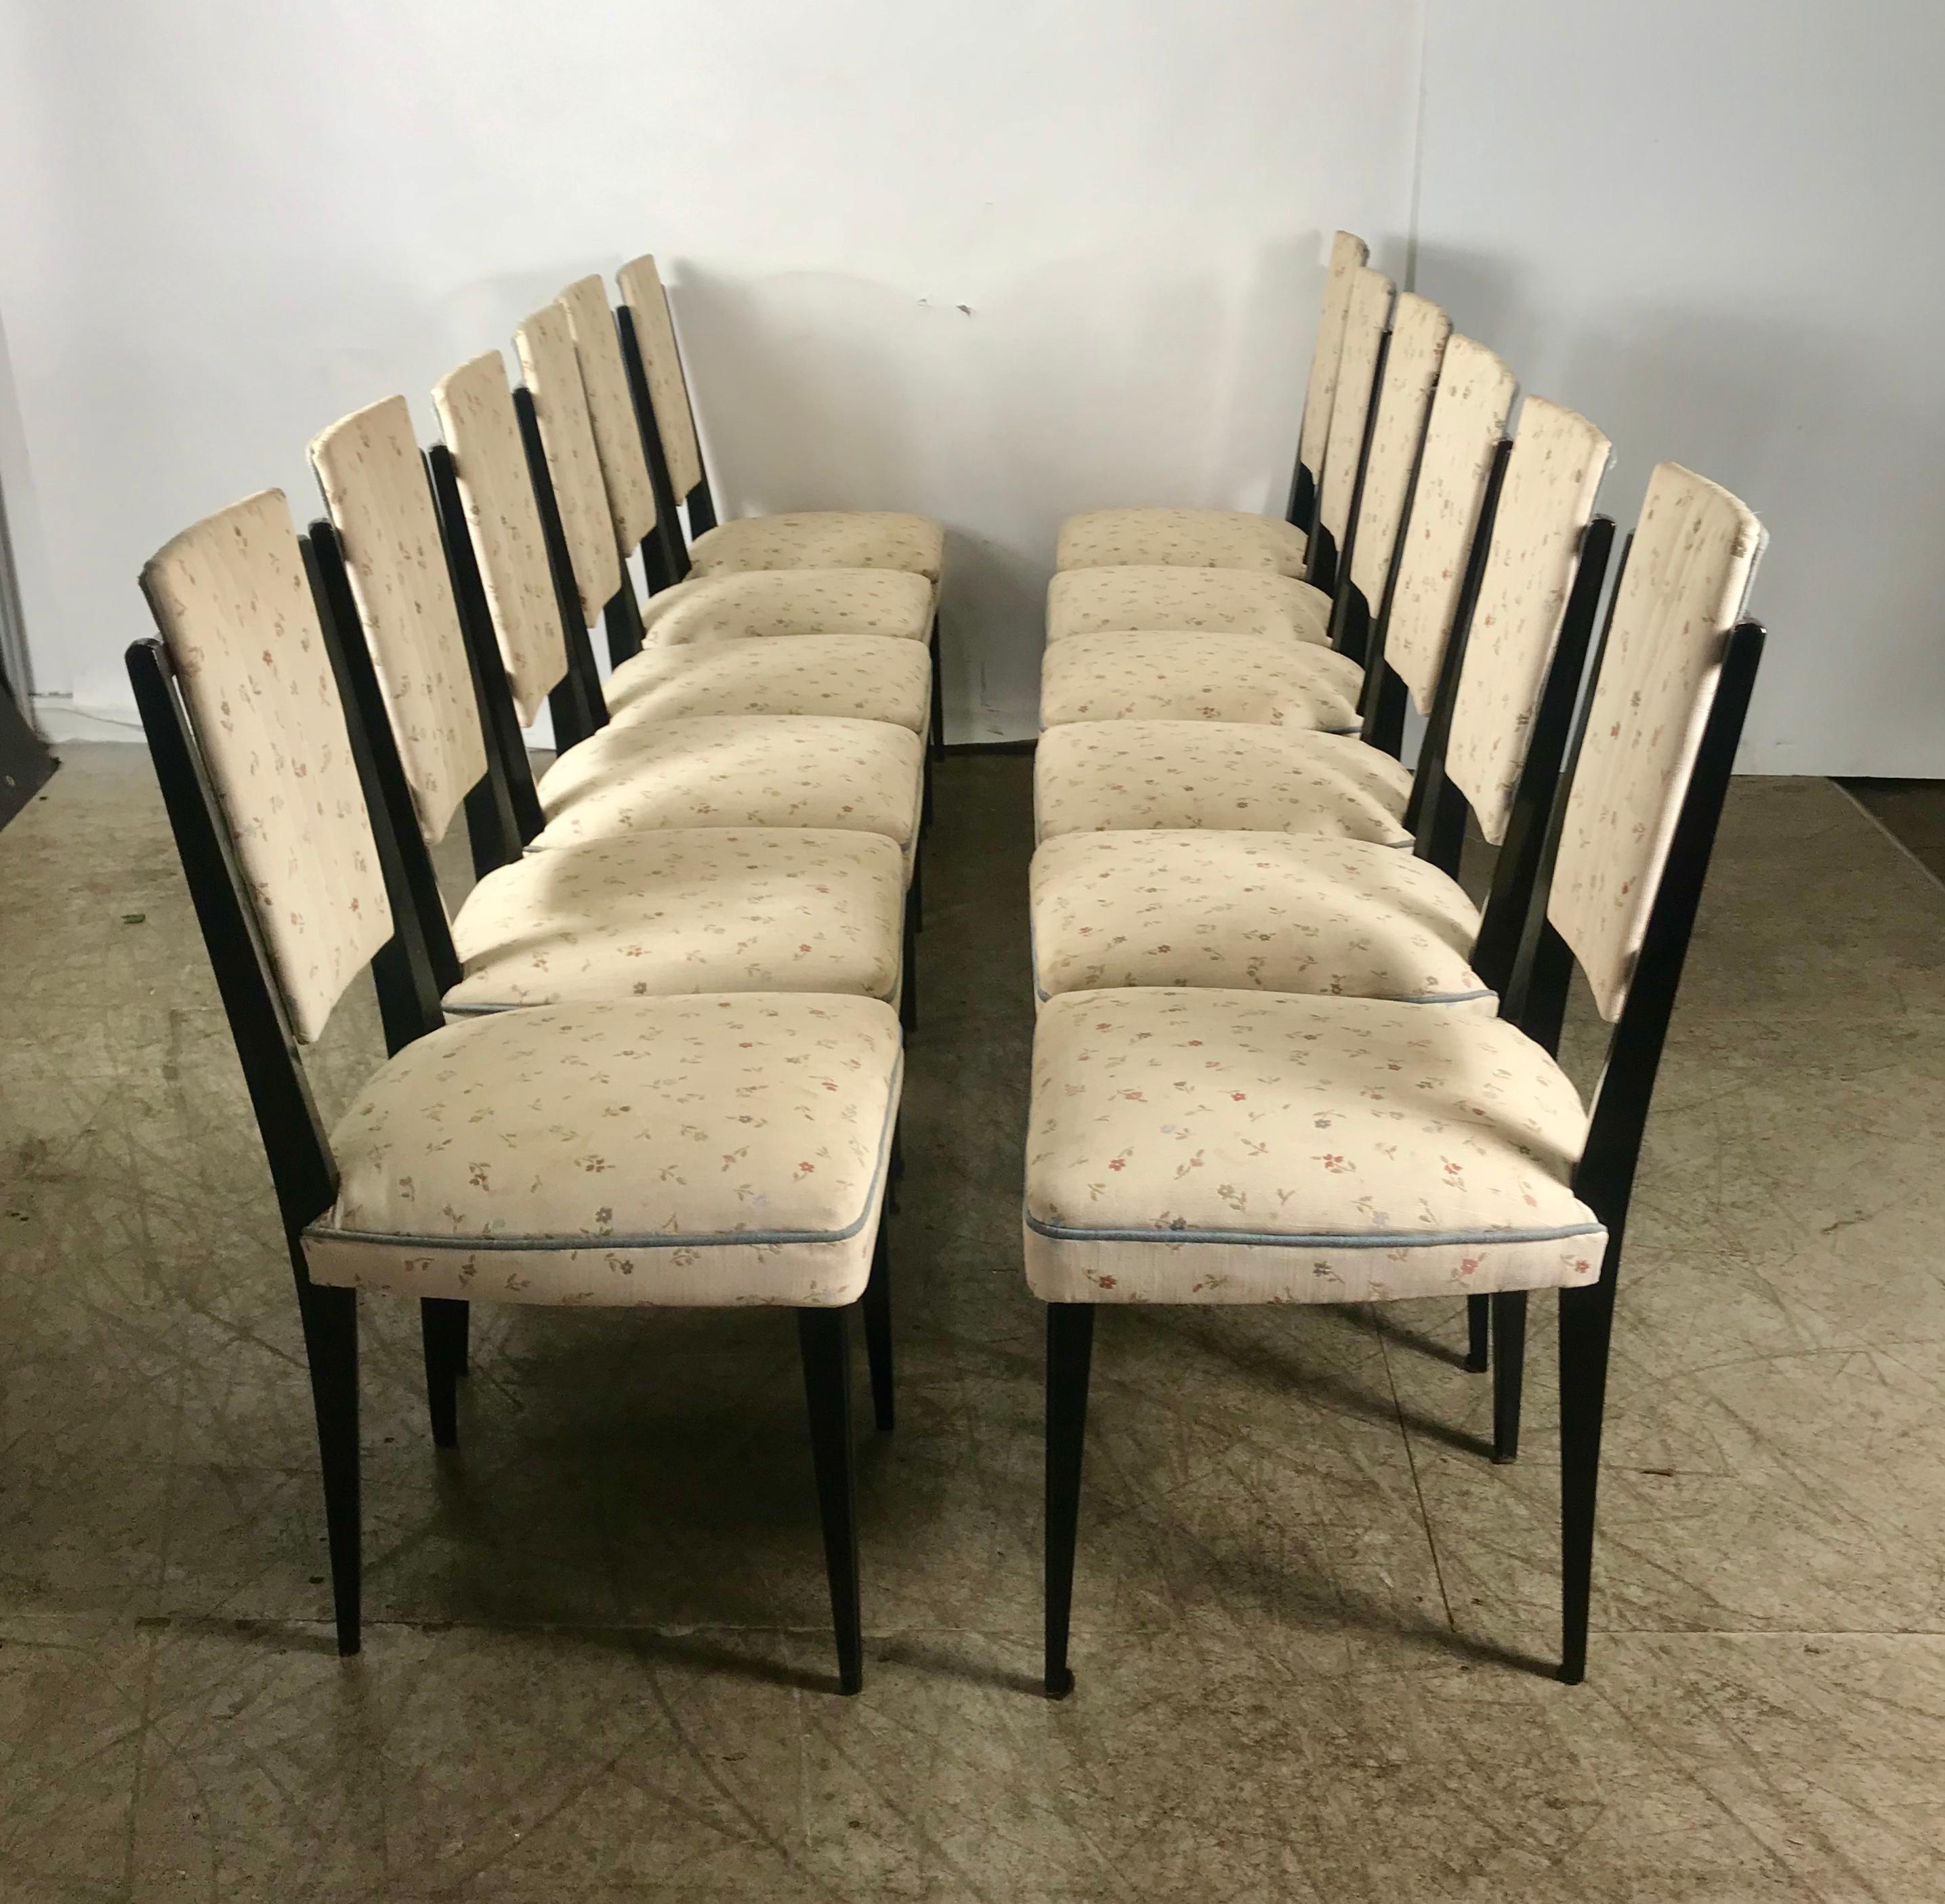 Lacquered Stunning Set of 12 Italian Modernist Dining Chairs Attributed to Osvaldo Borsani